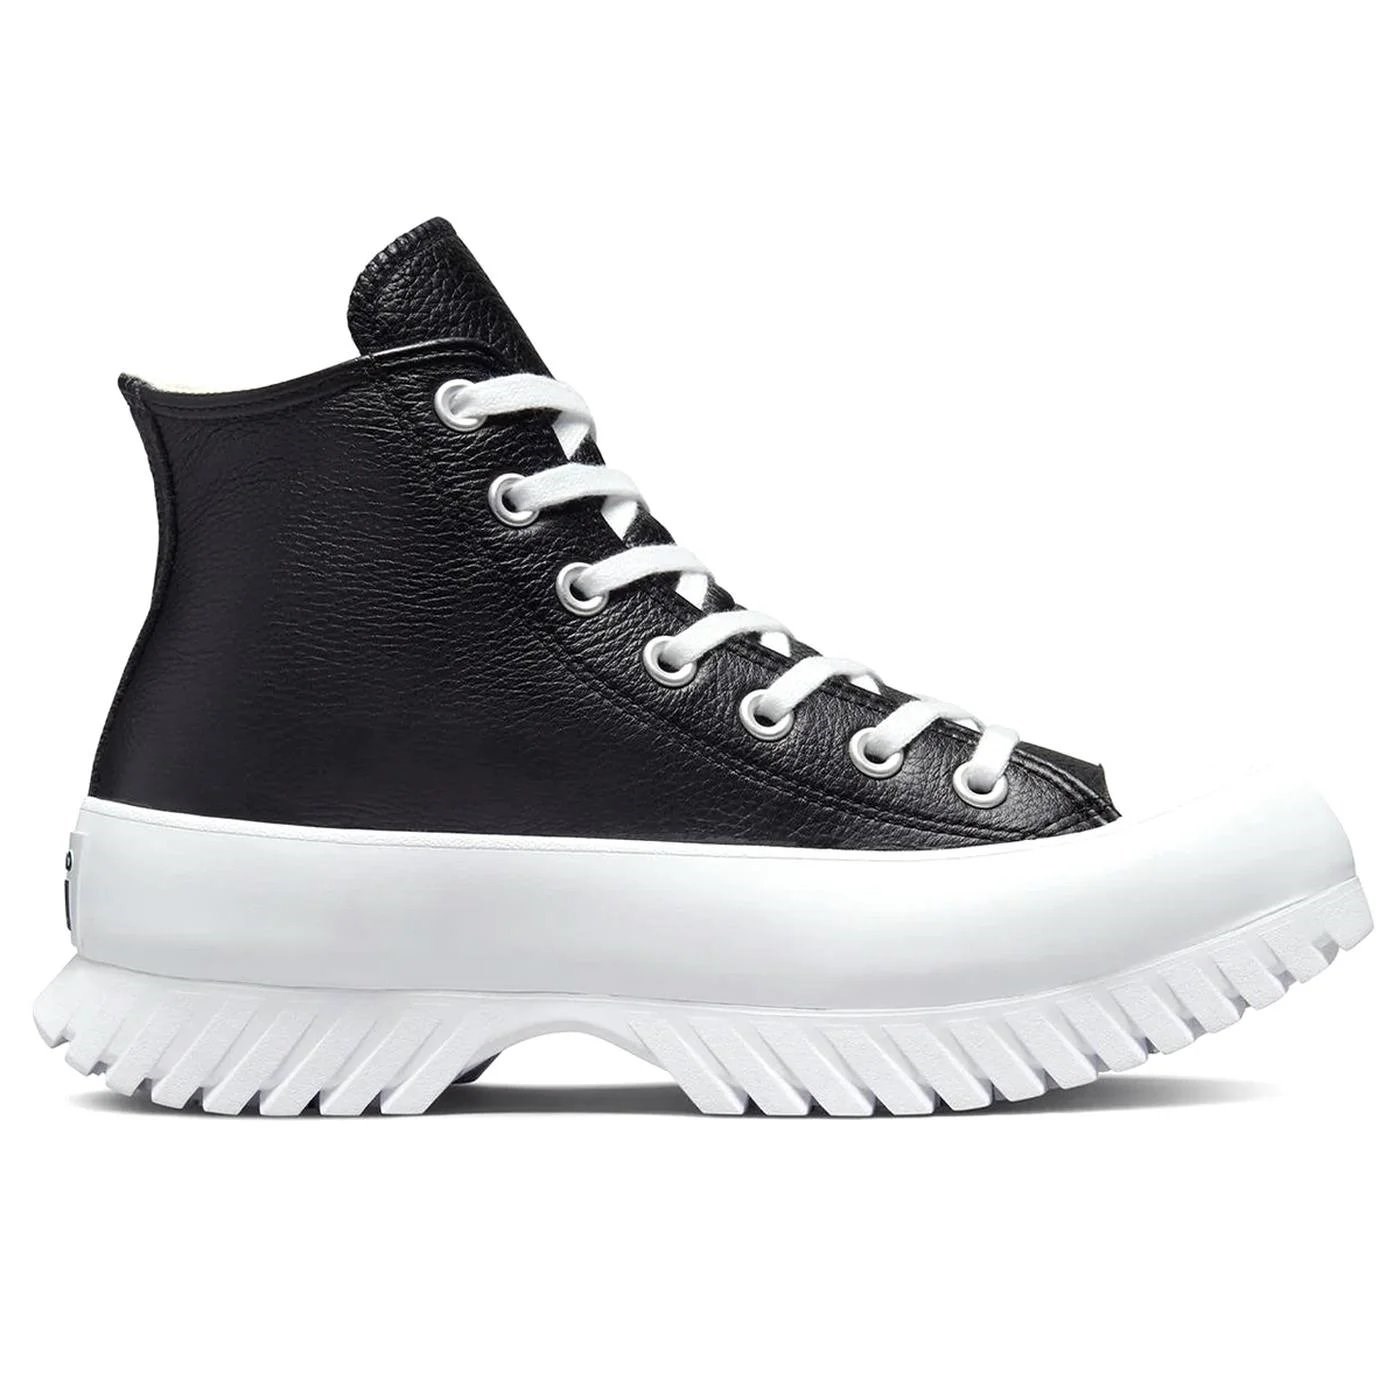 Converse Chuck Taylor All Star Lugged 2.0 Leather Kadın Sneaker Ayakkabı Siyah